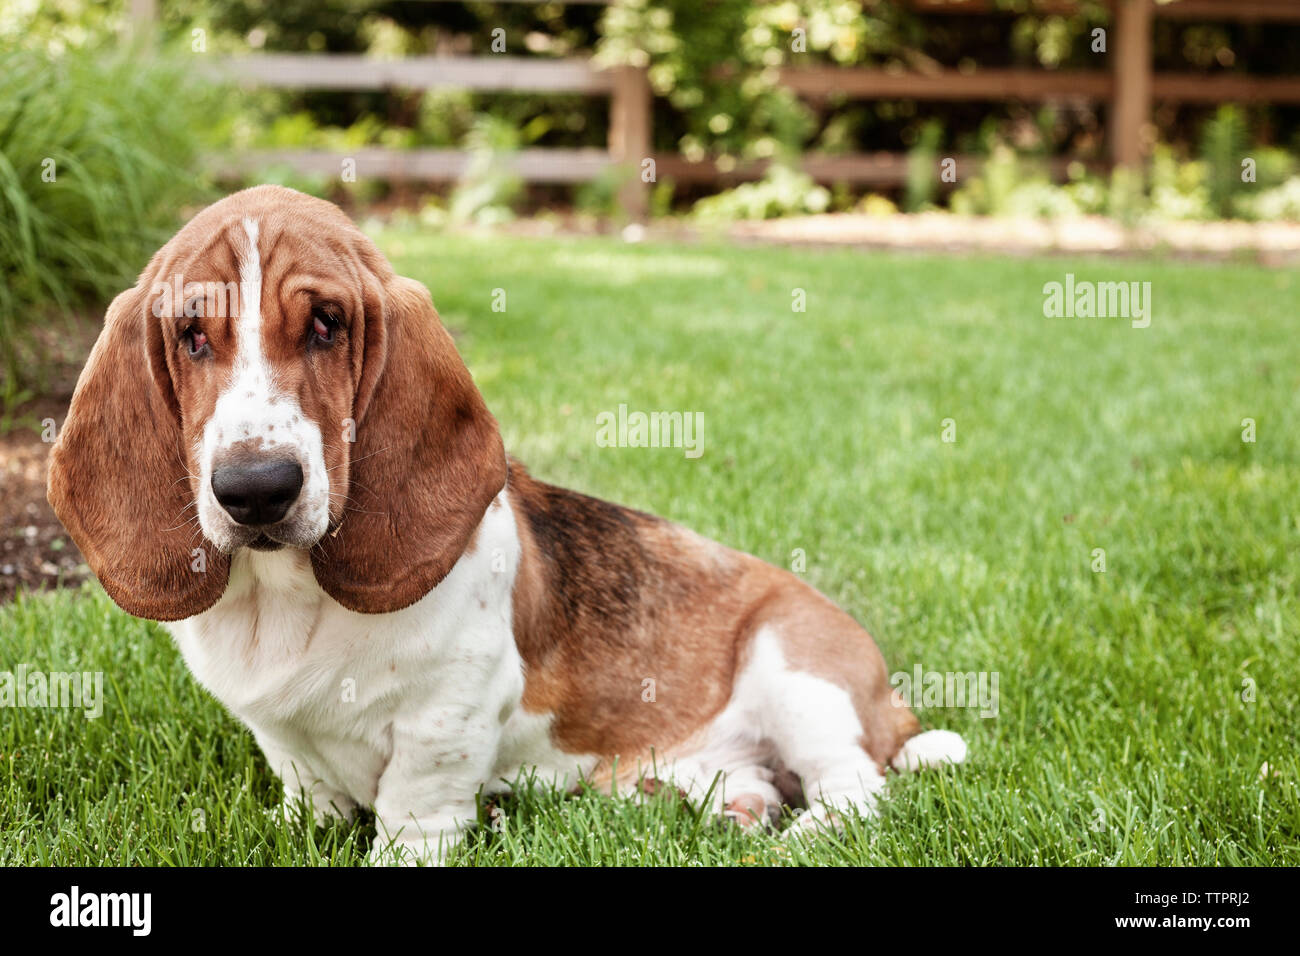 Portrait de basset-hound sitting on grassy field Banque D'Images